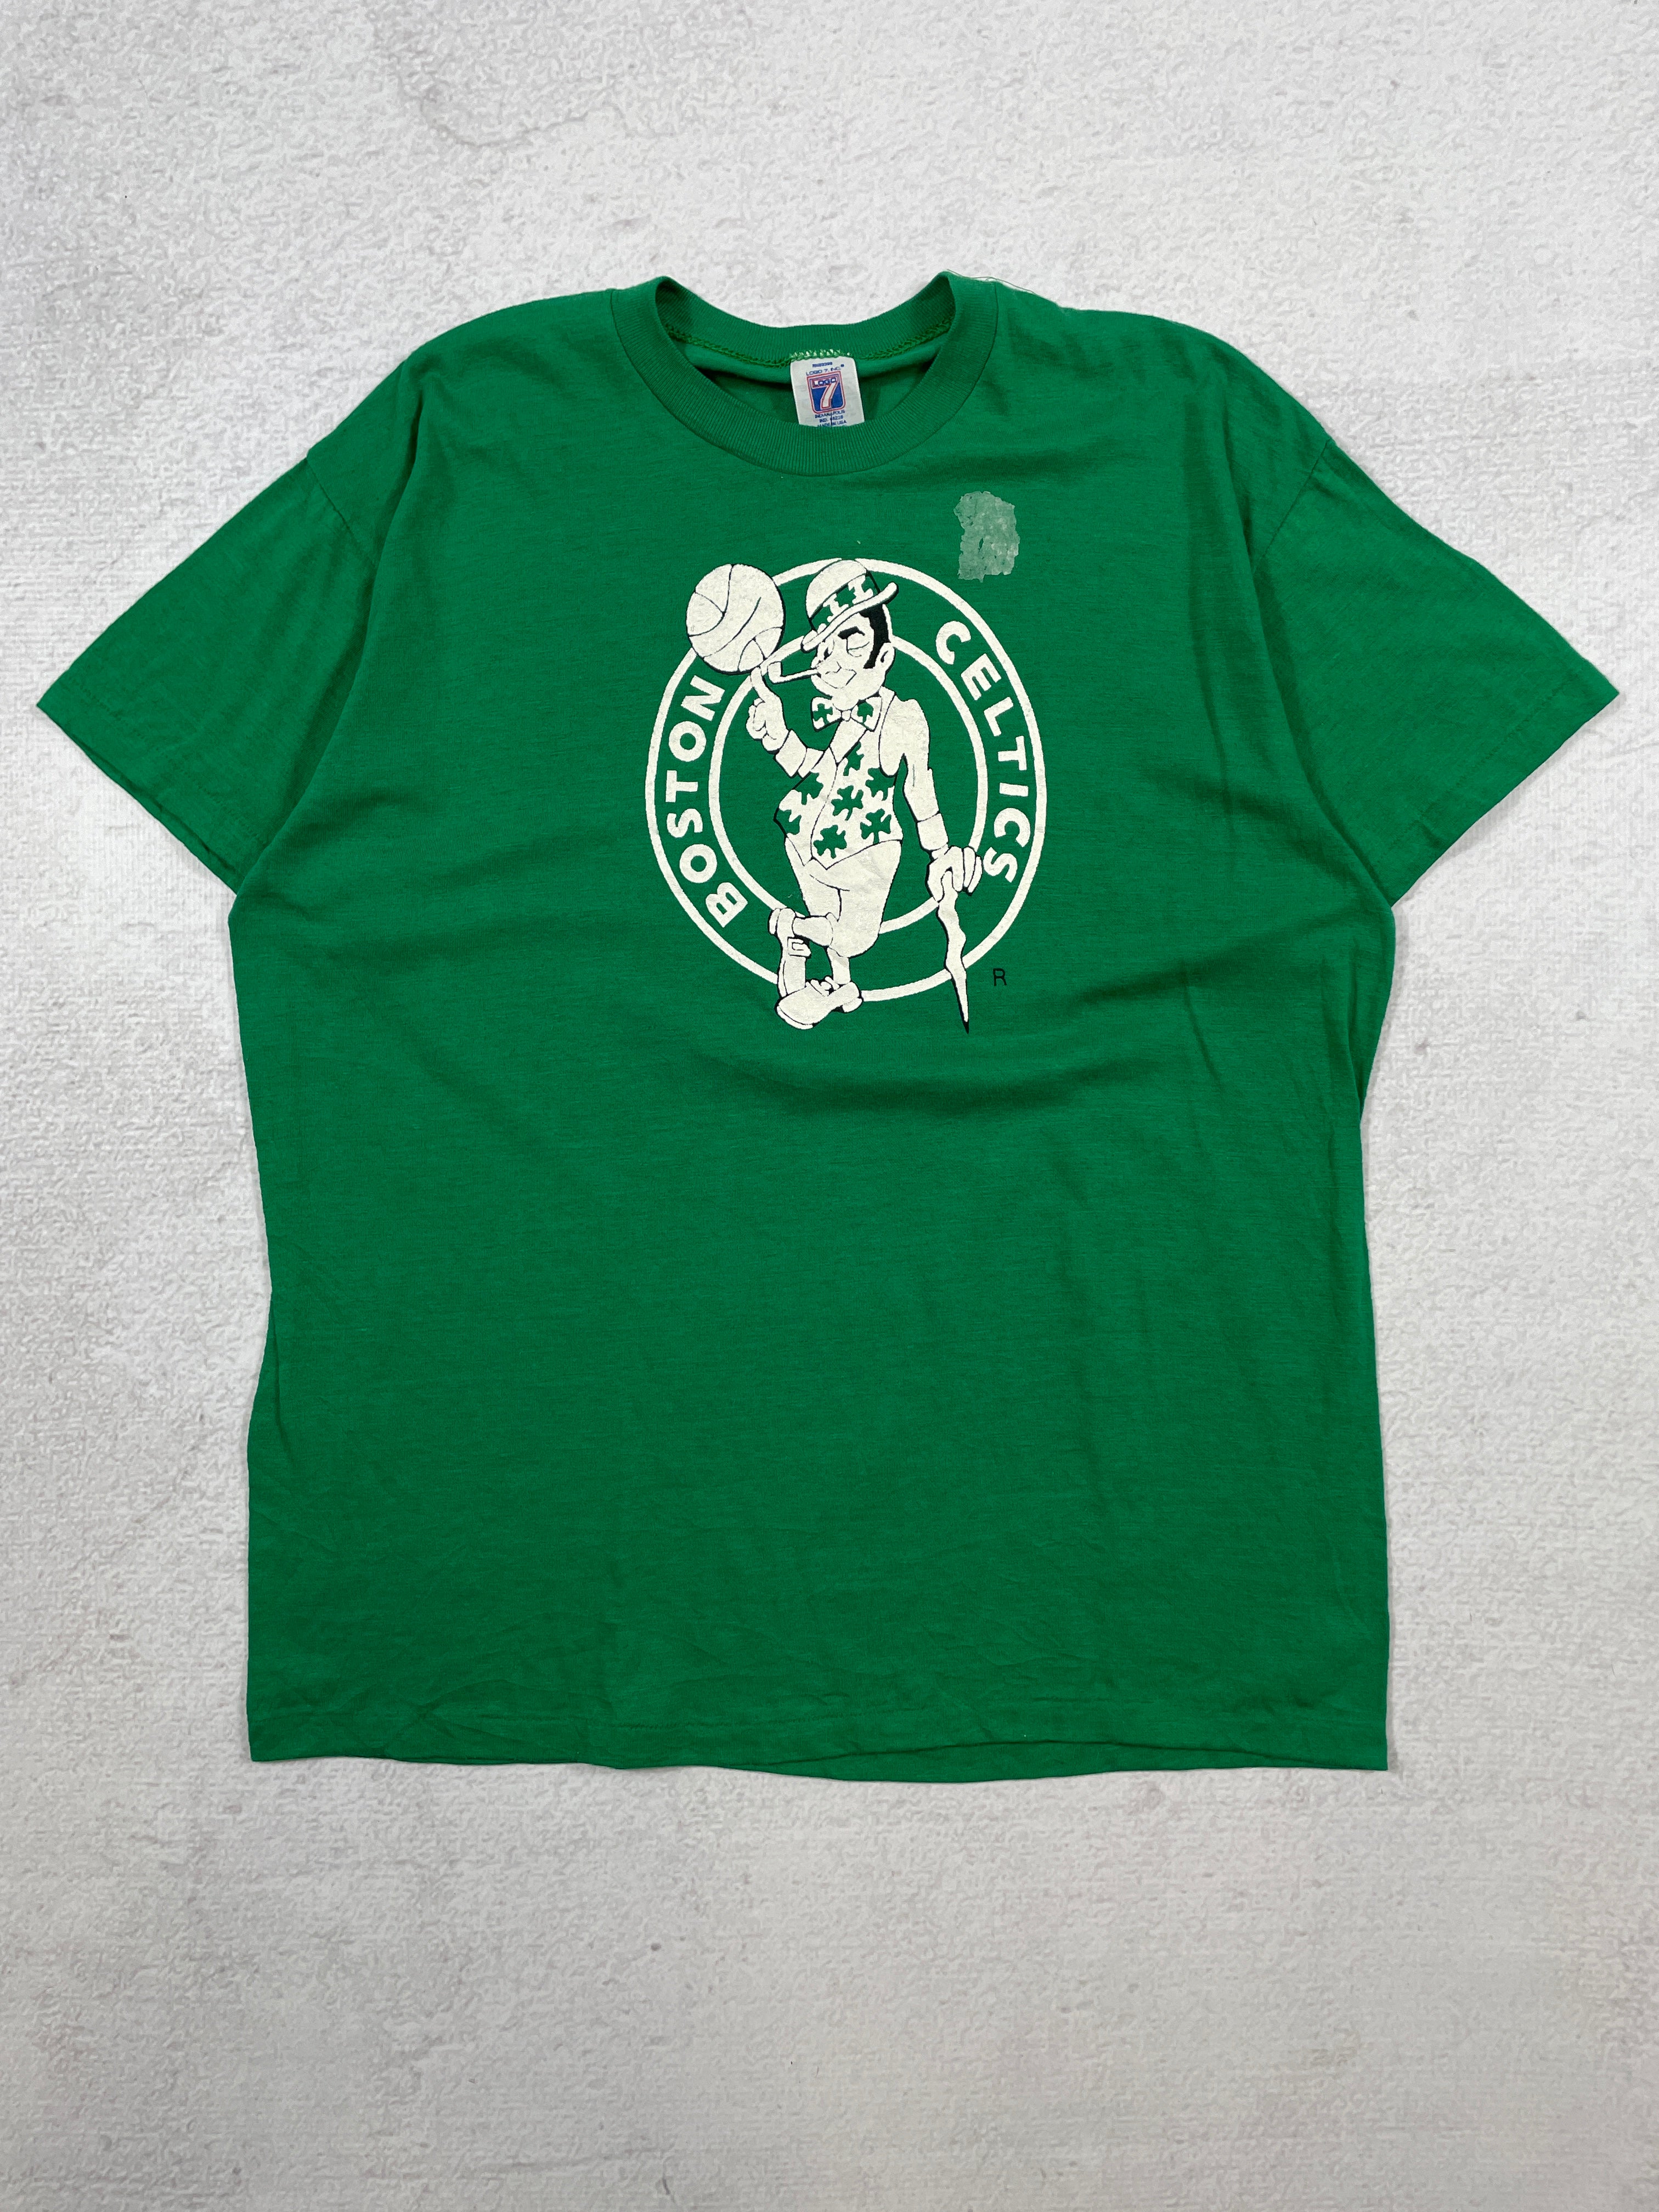 Vintage NBA Boston Celtics T-Shirt - Men's XL